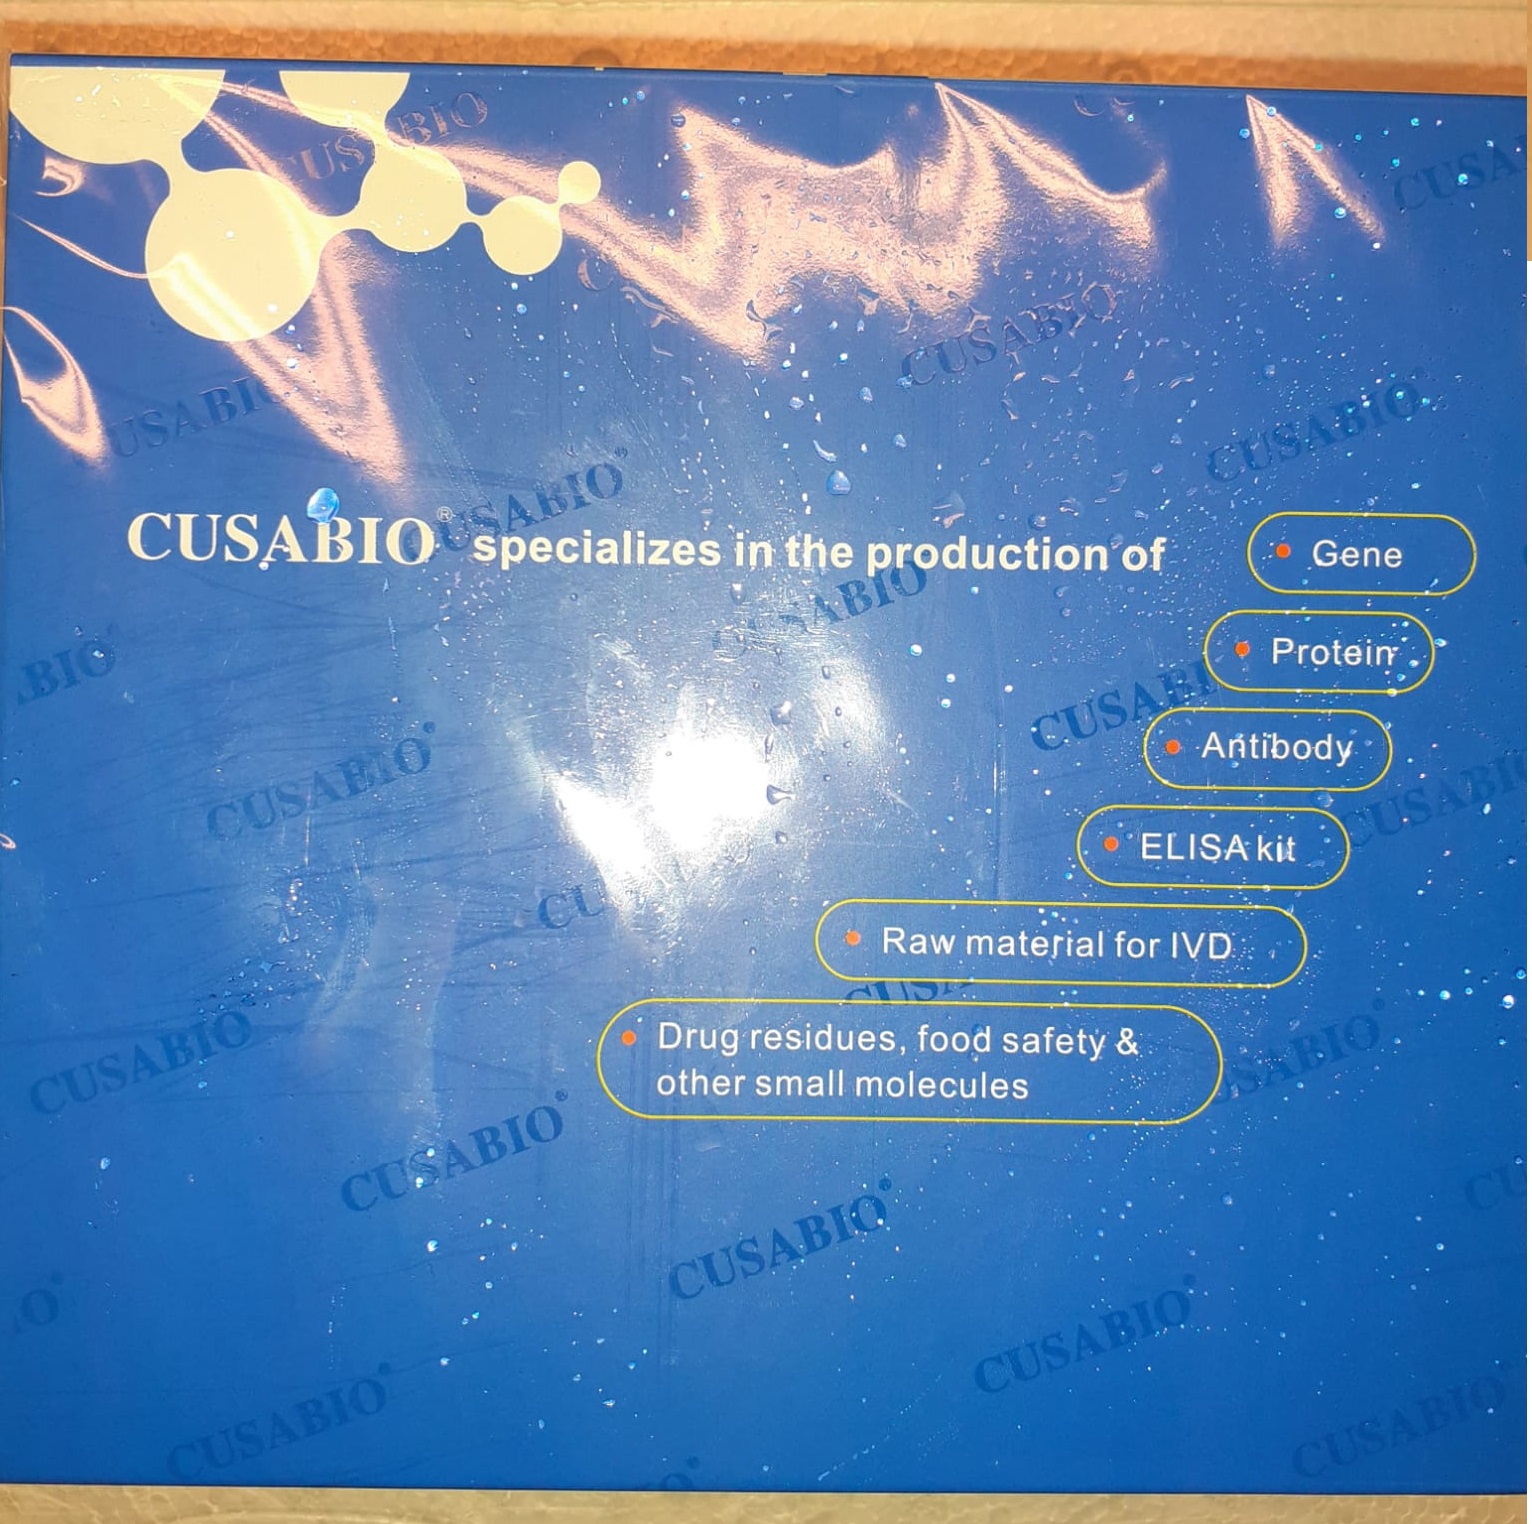 Development of Recombinant Antibody Cusabio